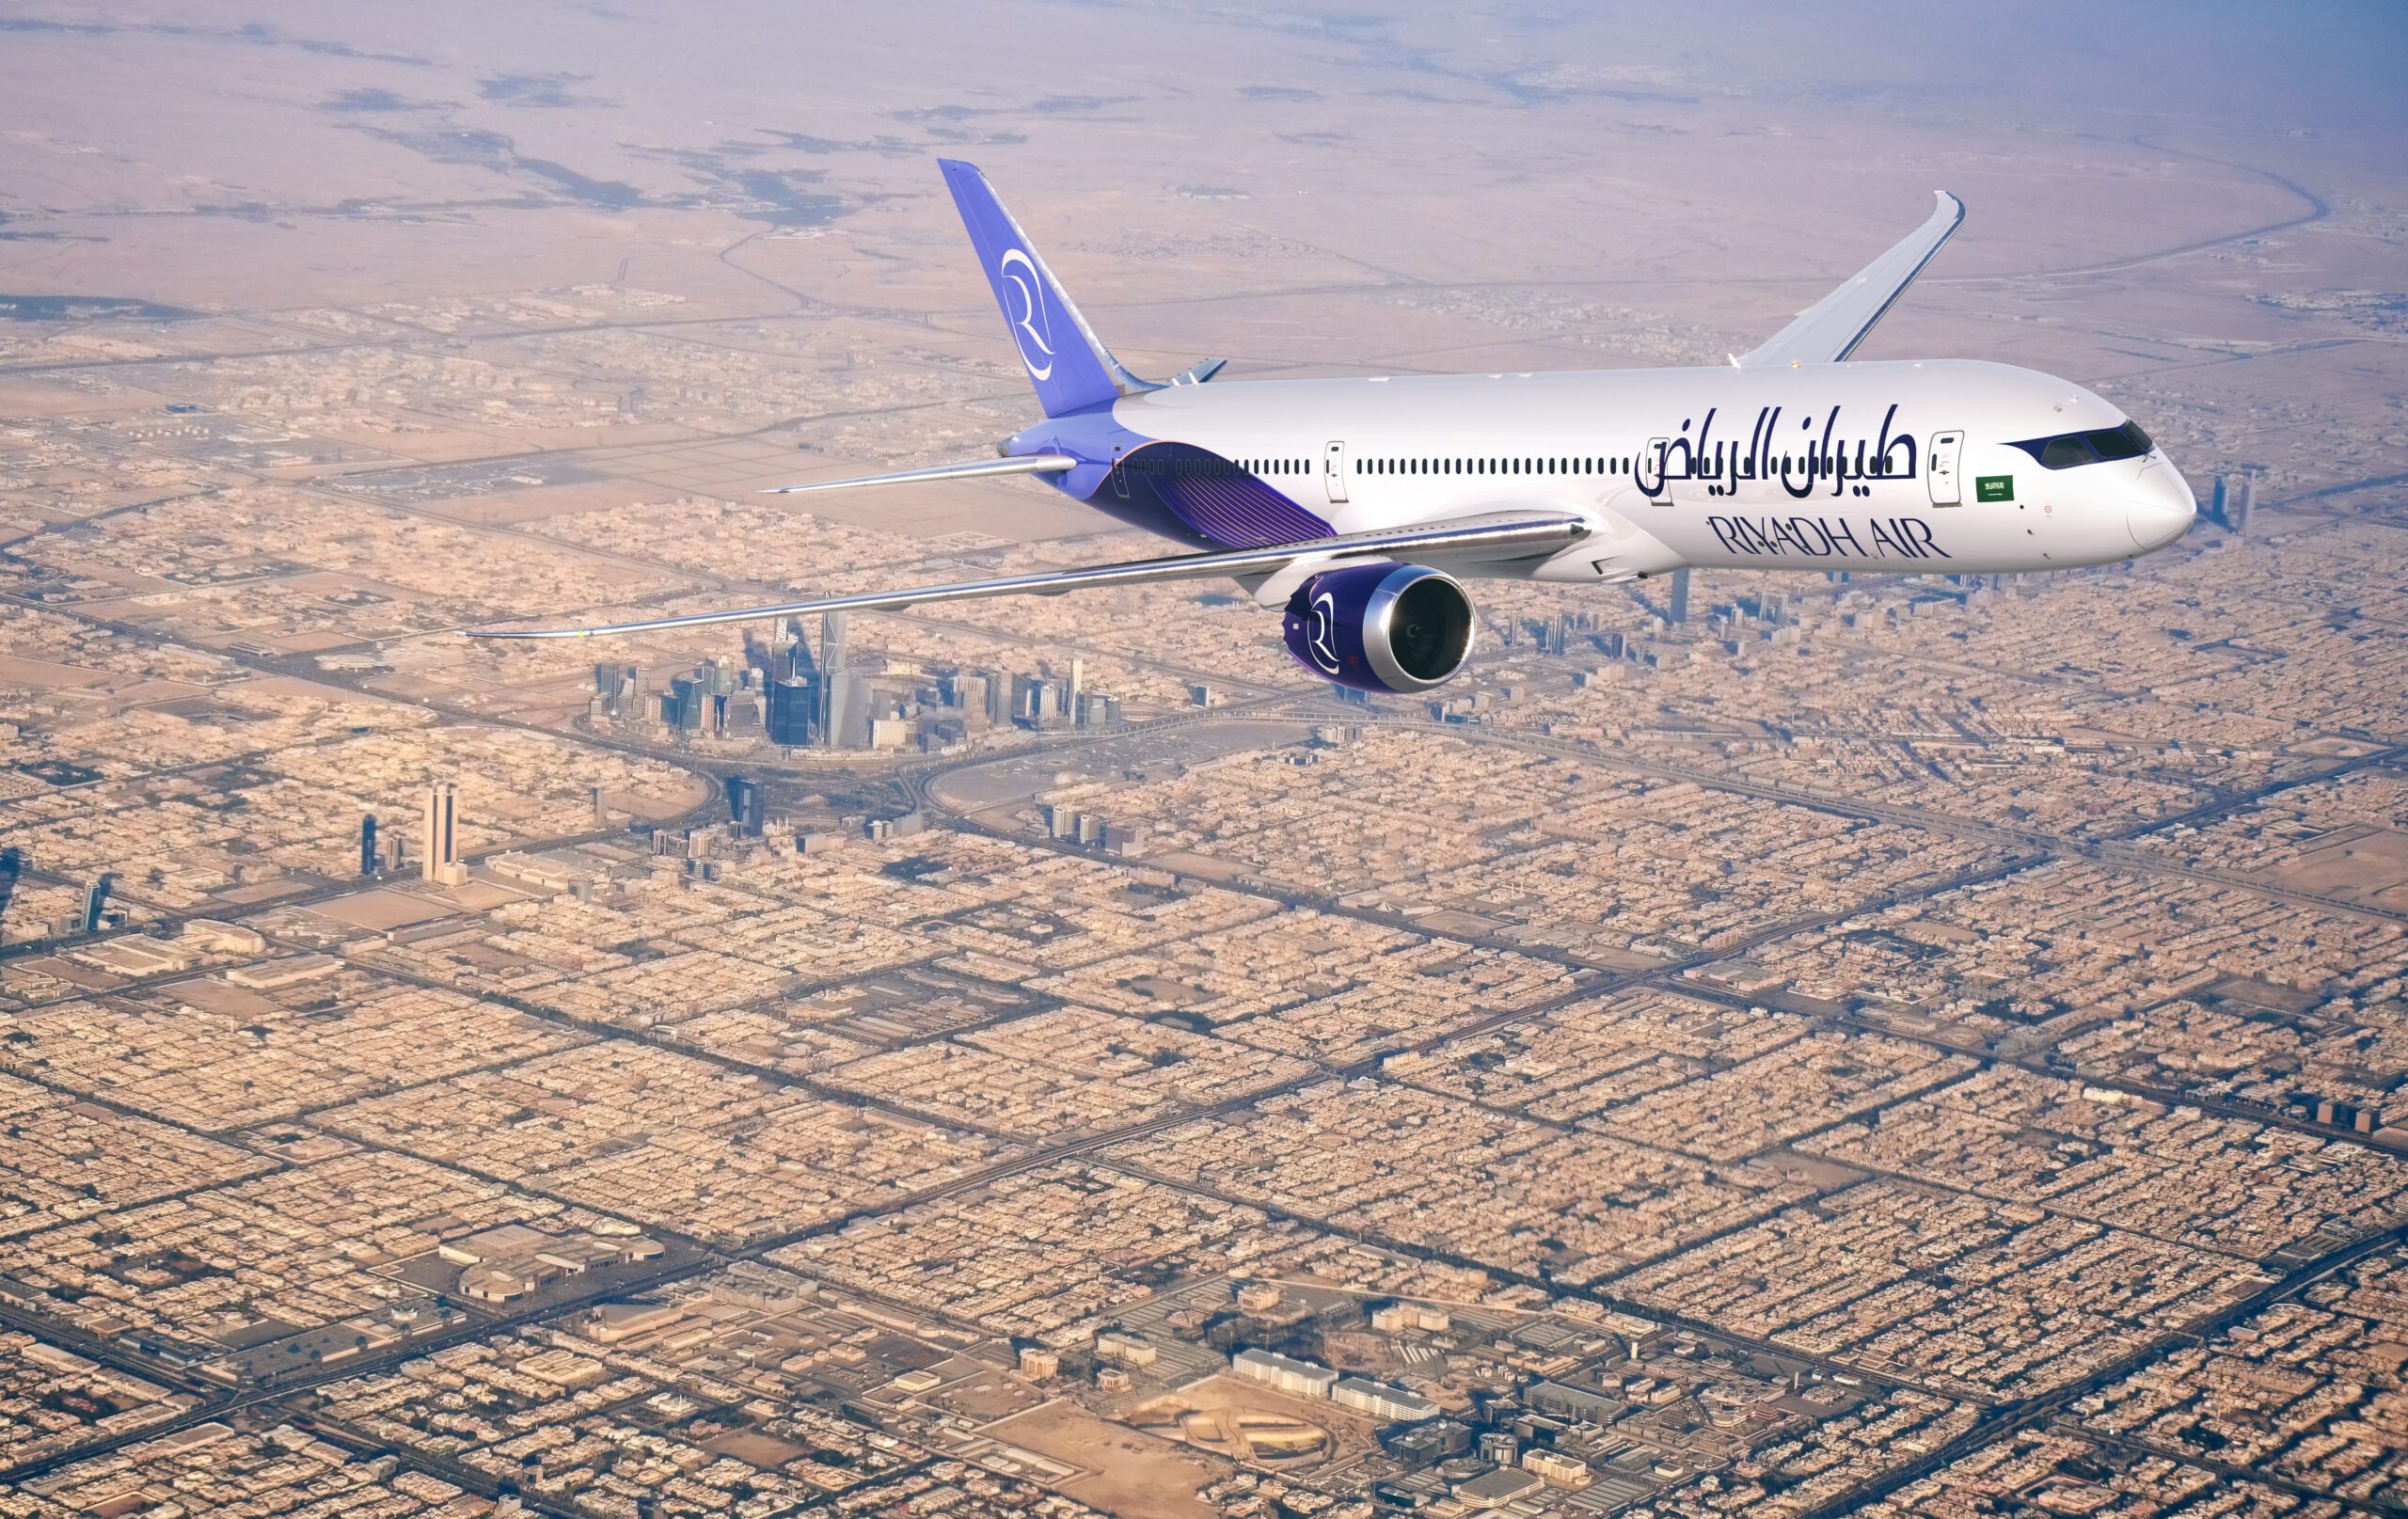 Riyadh Air revealed its new livery design at the Dubai Airshow